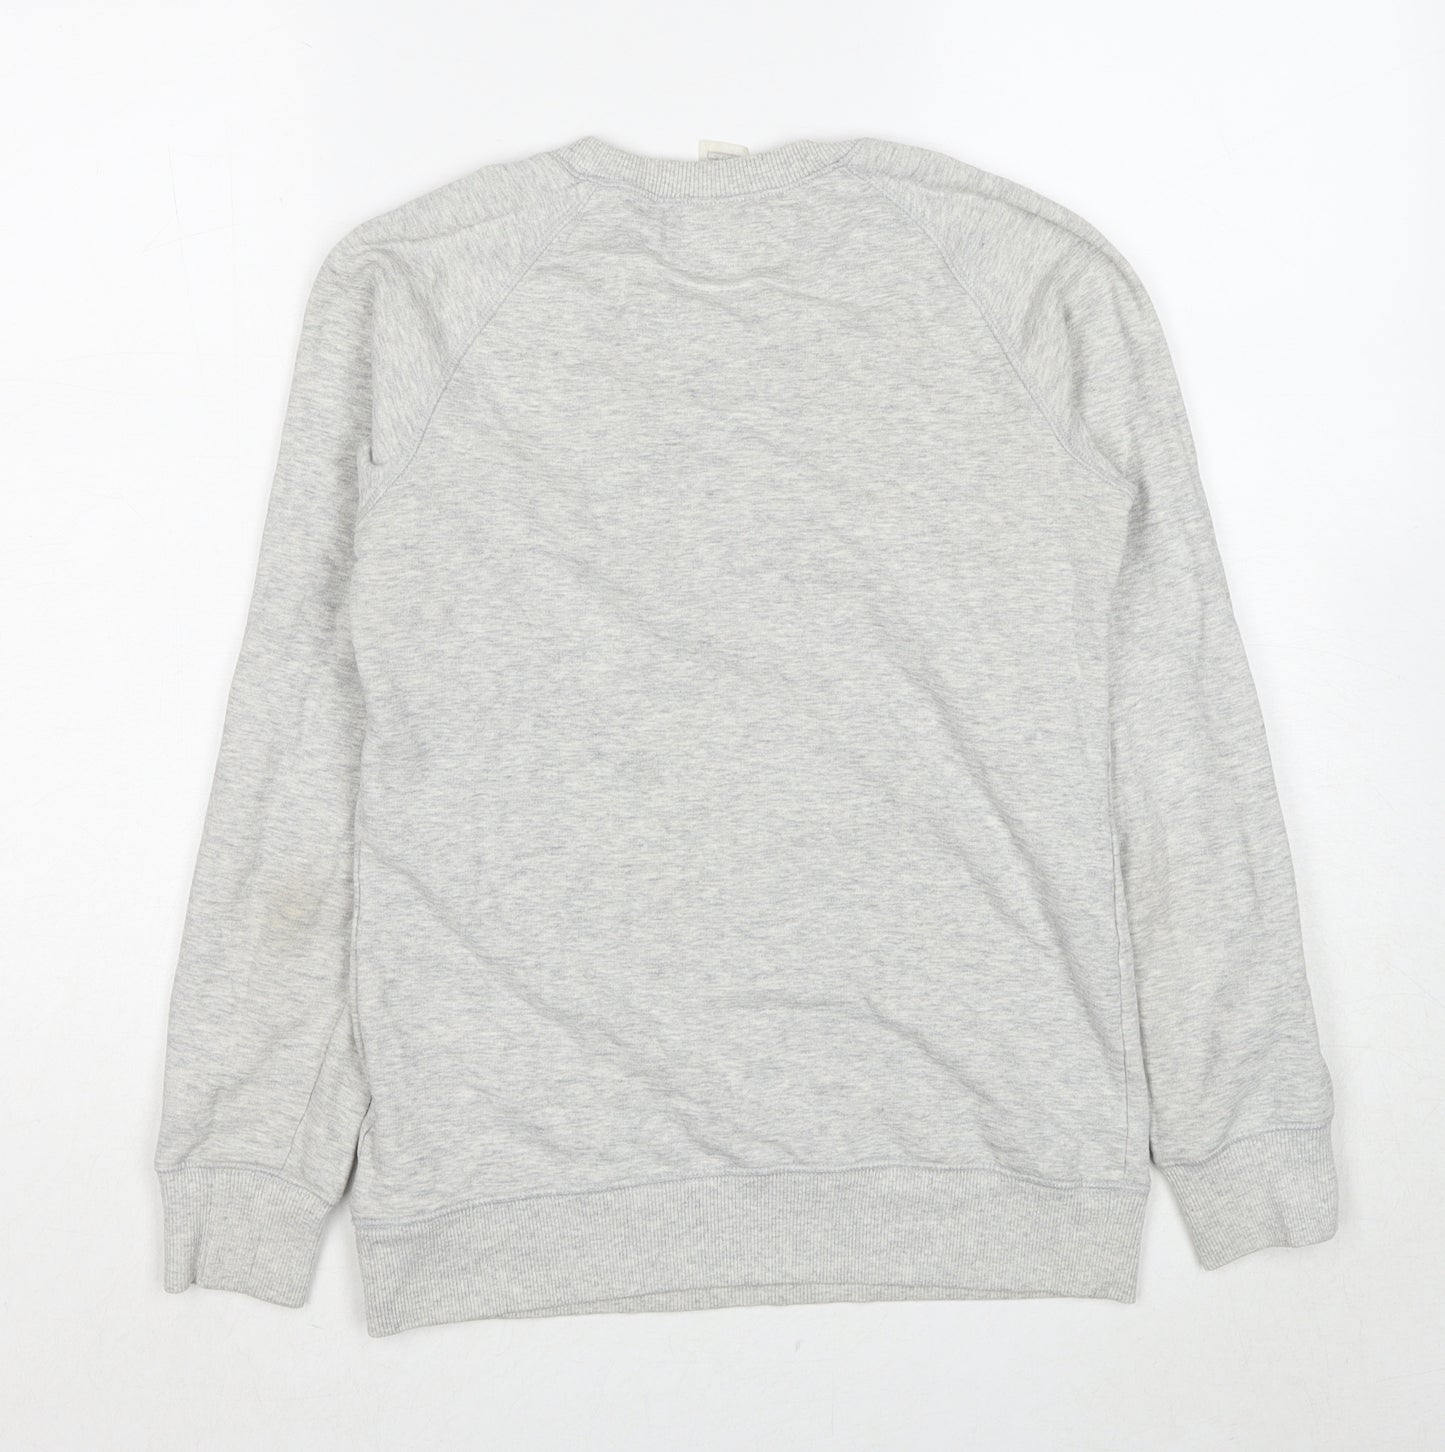 DECATHLON Womens Grey Cotton Pullover Sweatshirt Size XS Pullover